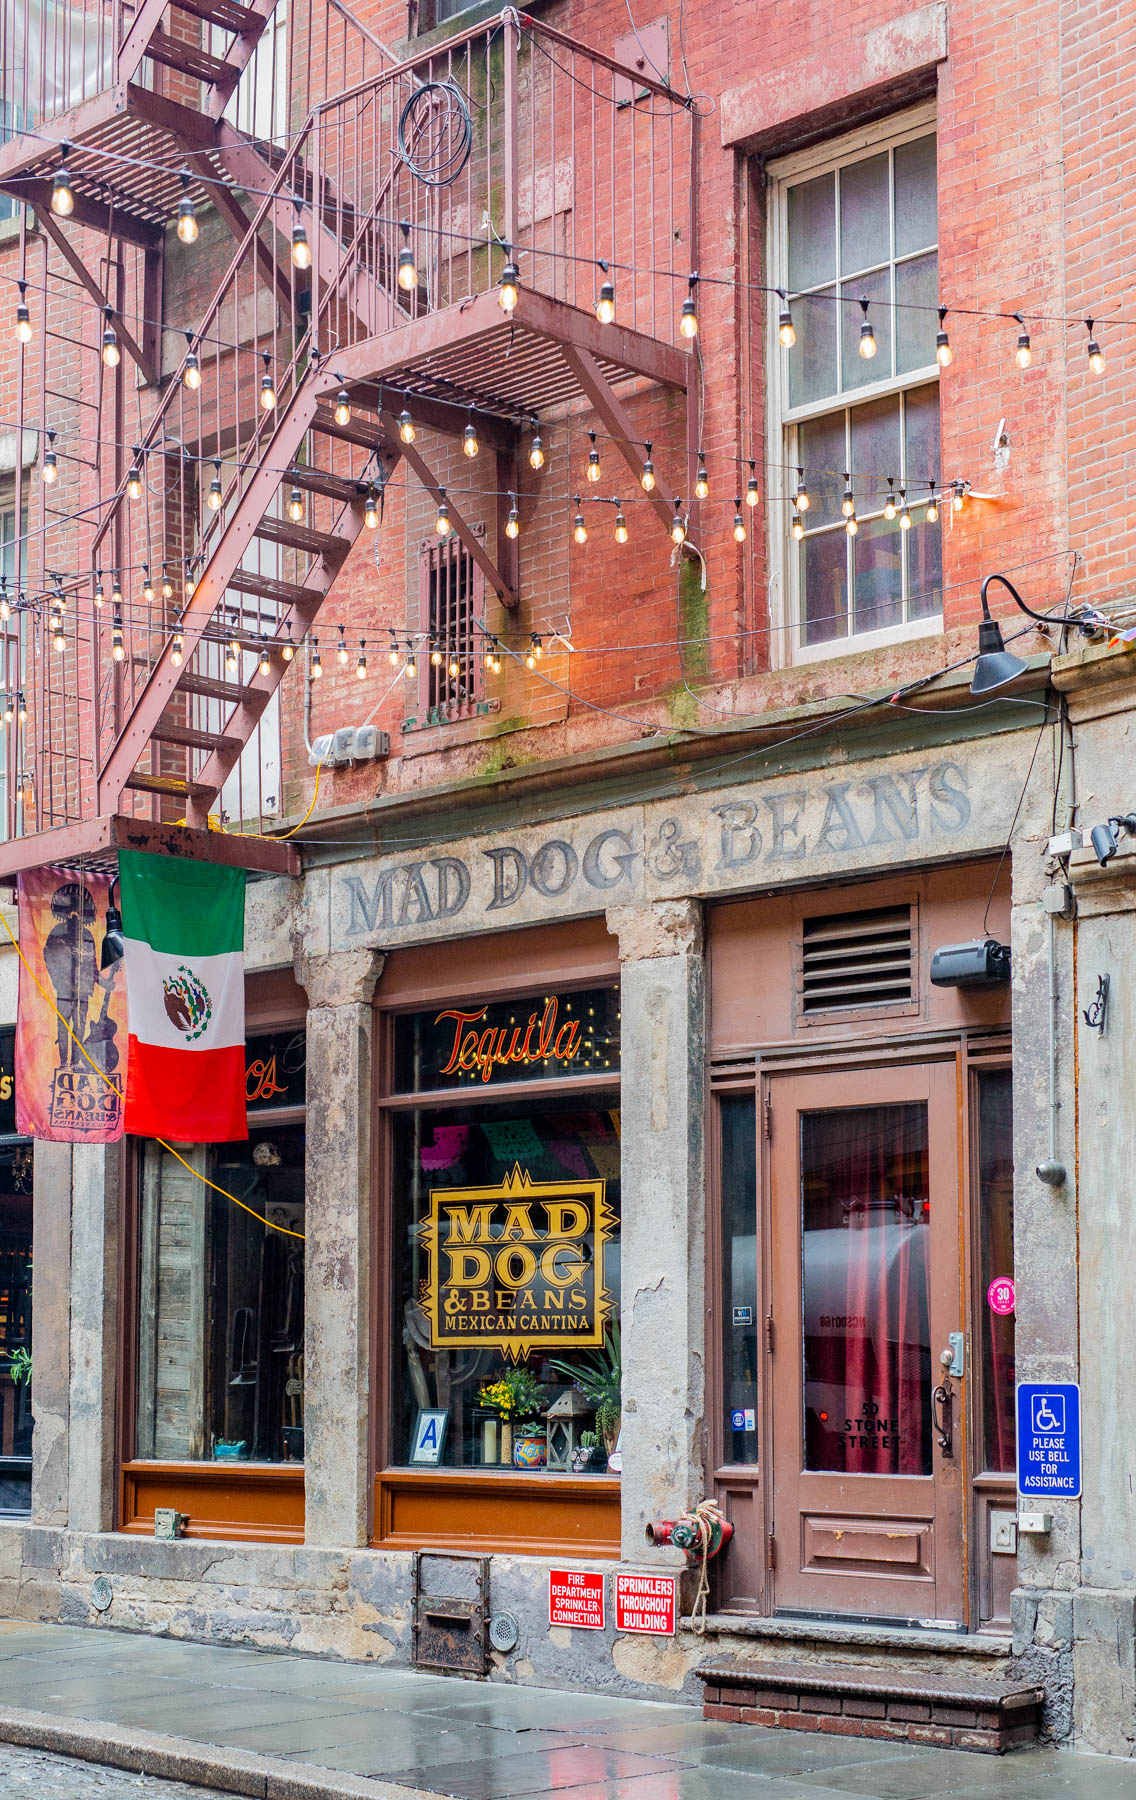 Mad Dog & Beans on Stone Street, FiDi NYC